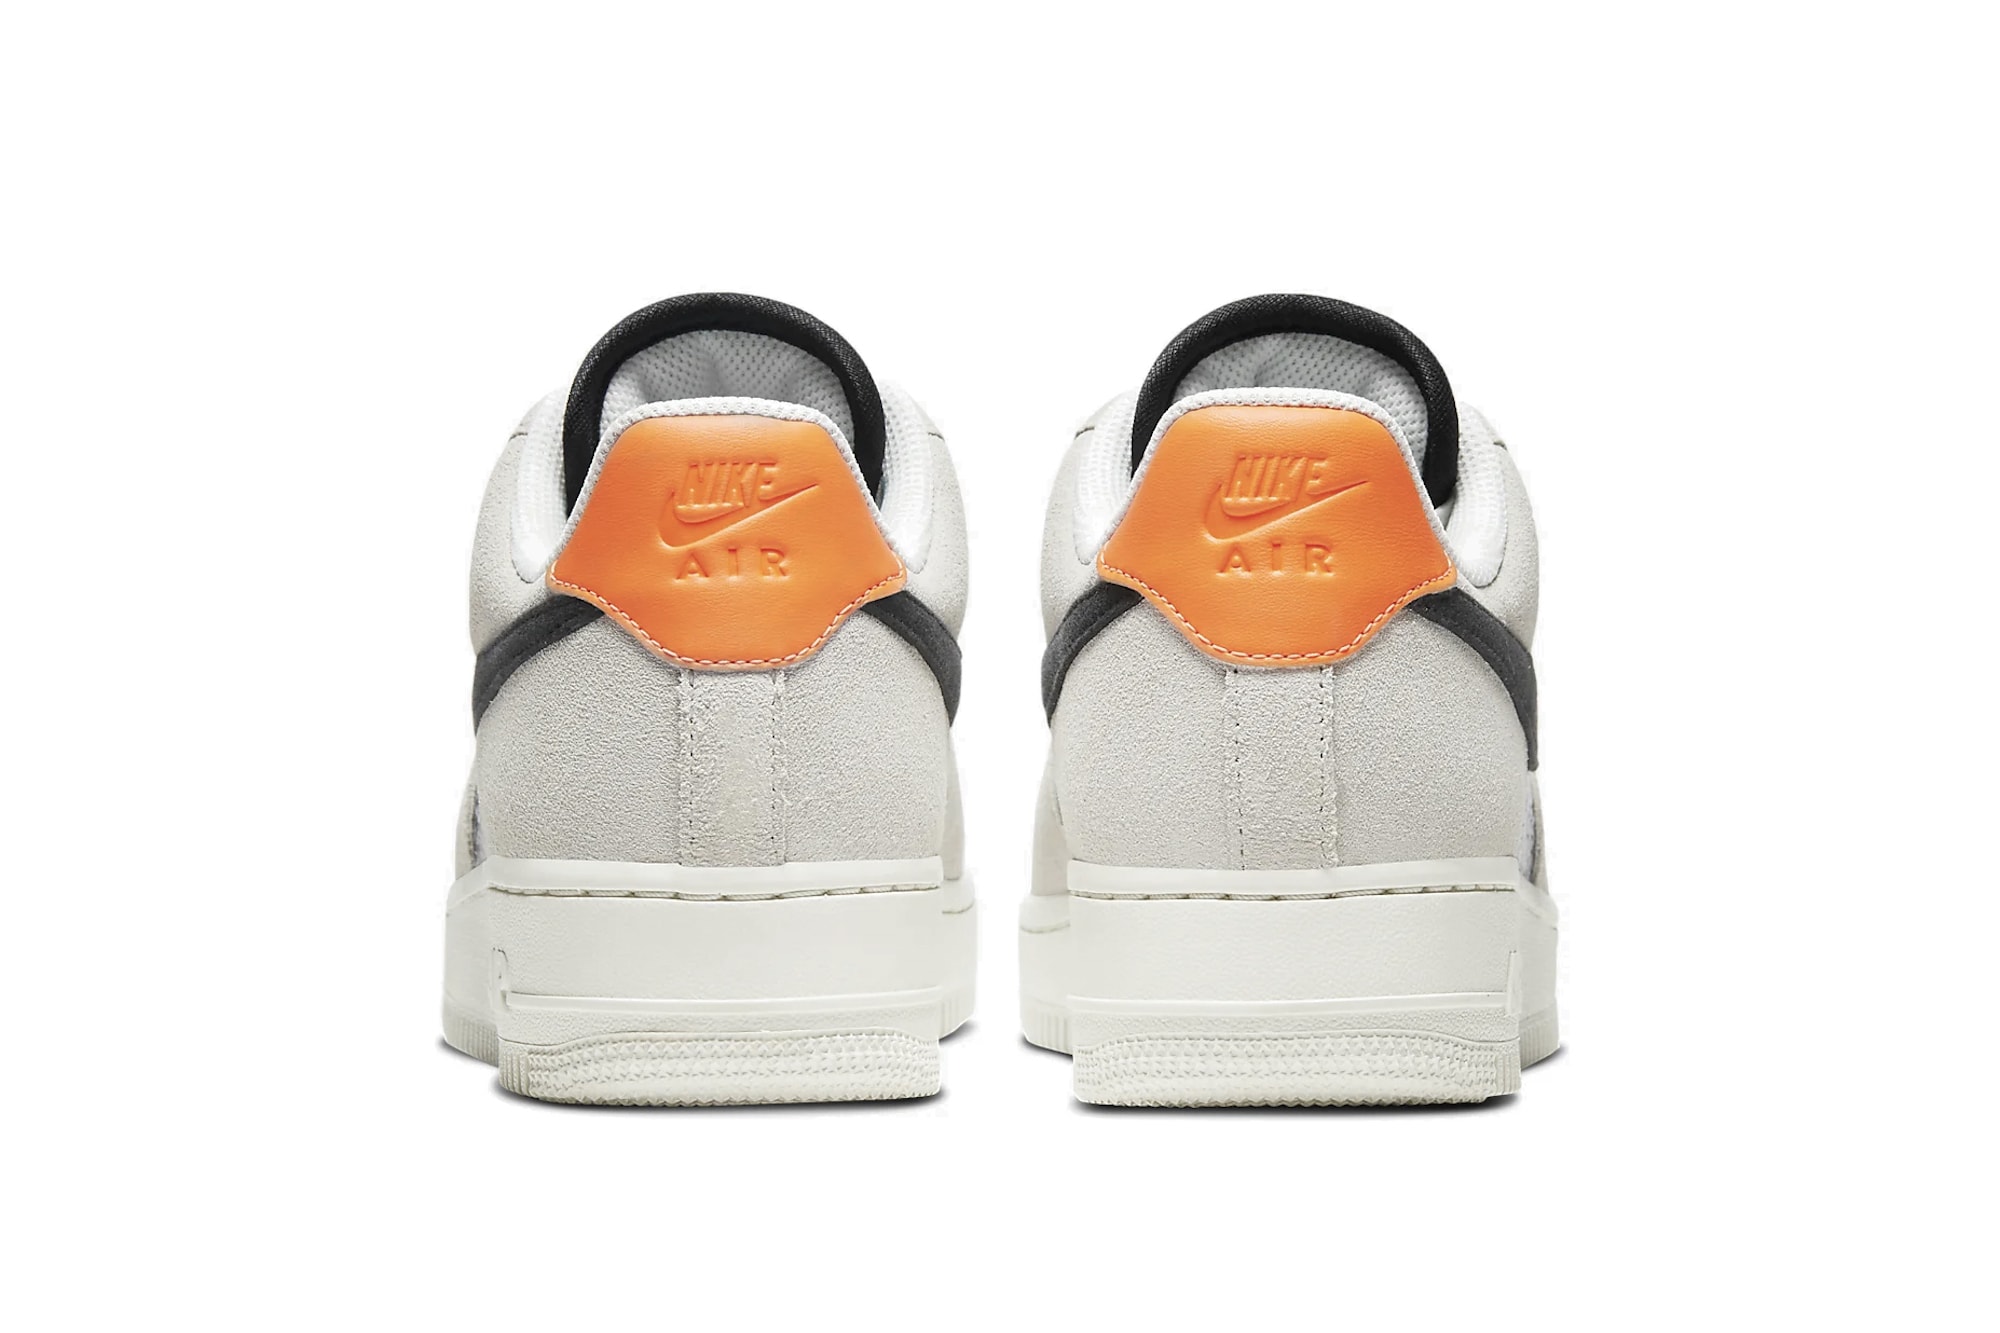 Nike Air Force 1 Light Bone/Sail/Hyper Crimson Sneaker Trainer Shoe Snake Skin Print Orange Blue